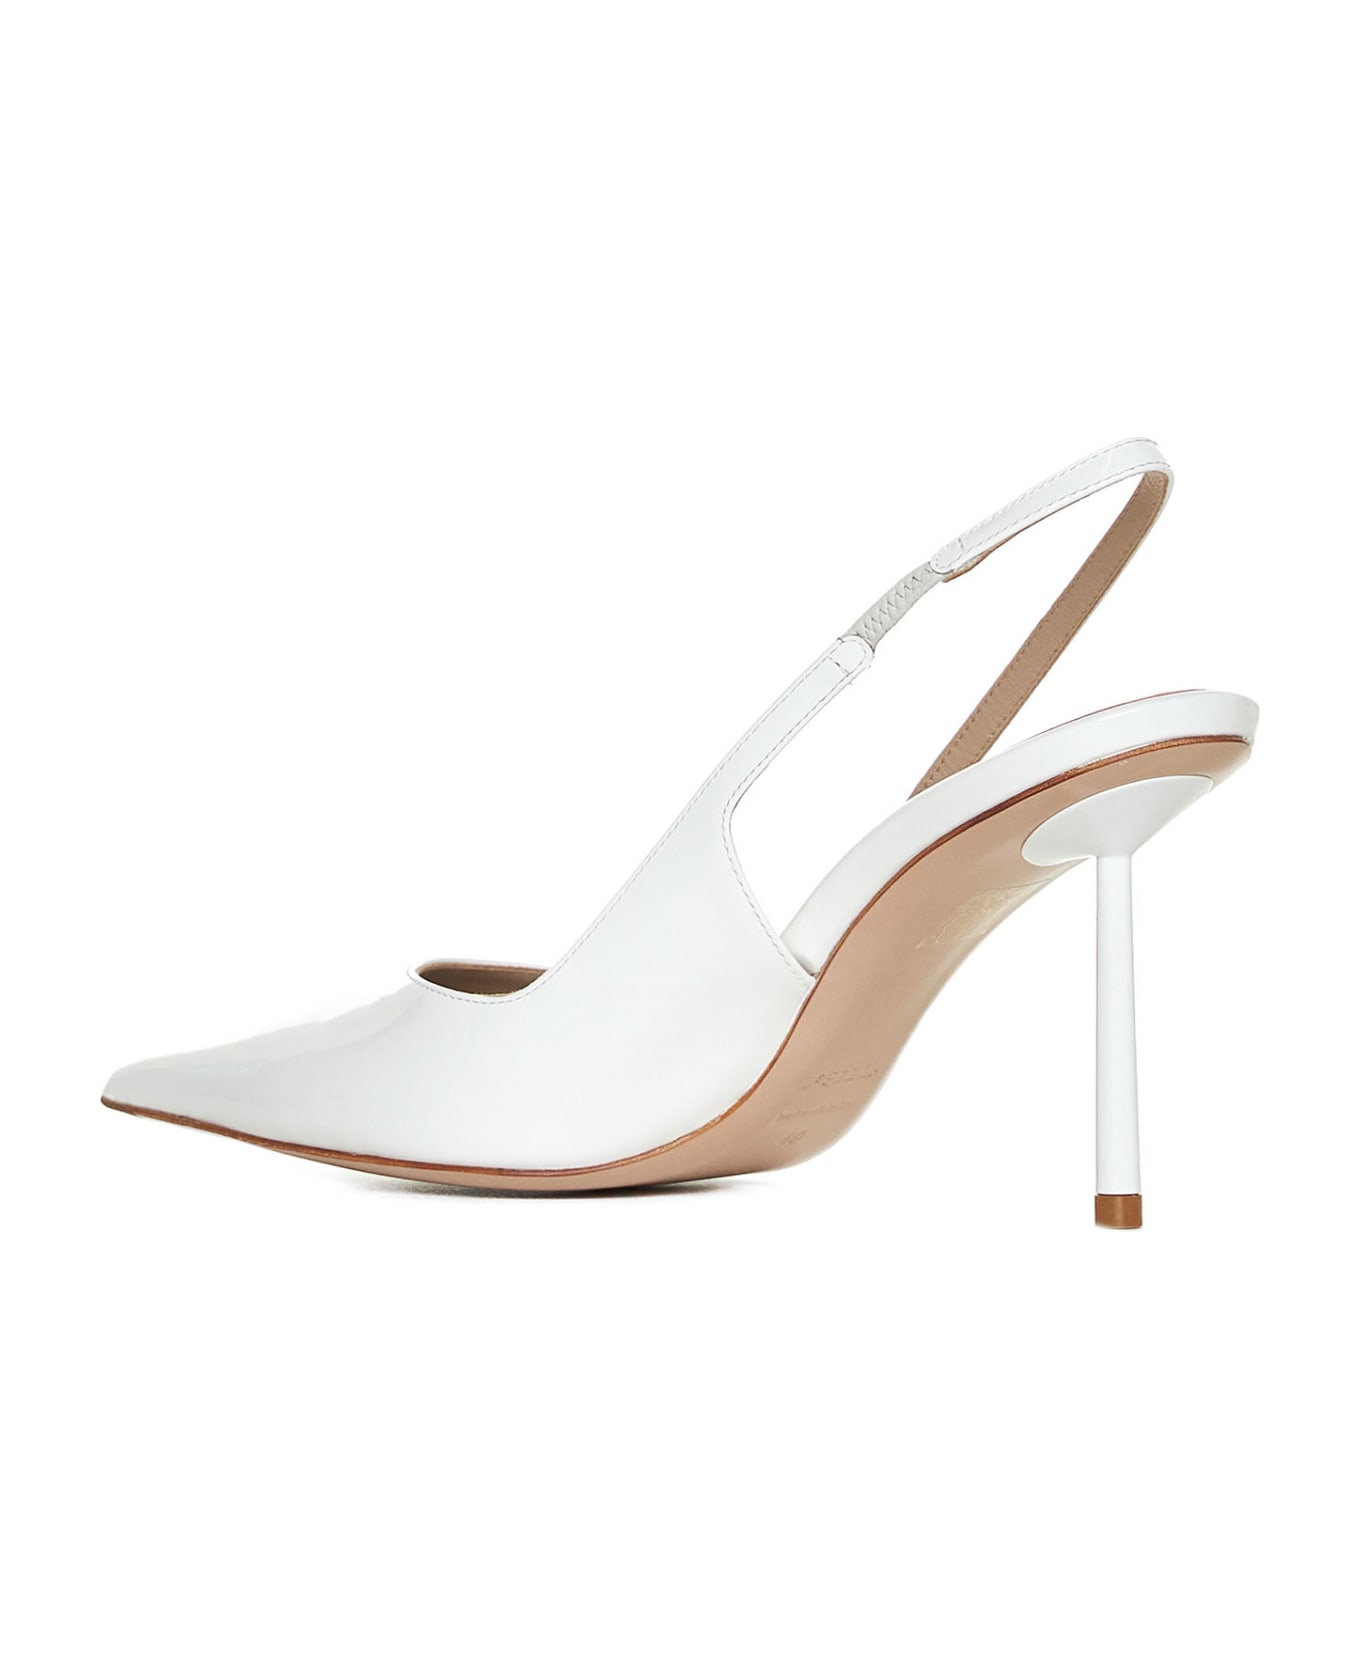 Le Silla High-heeled shoe - Carta ハイヒール